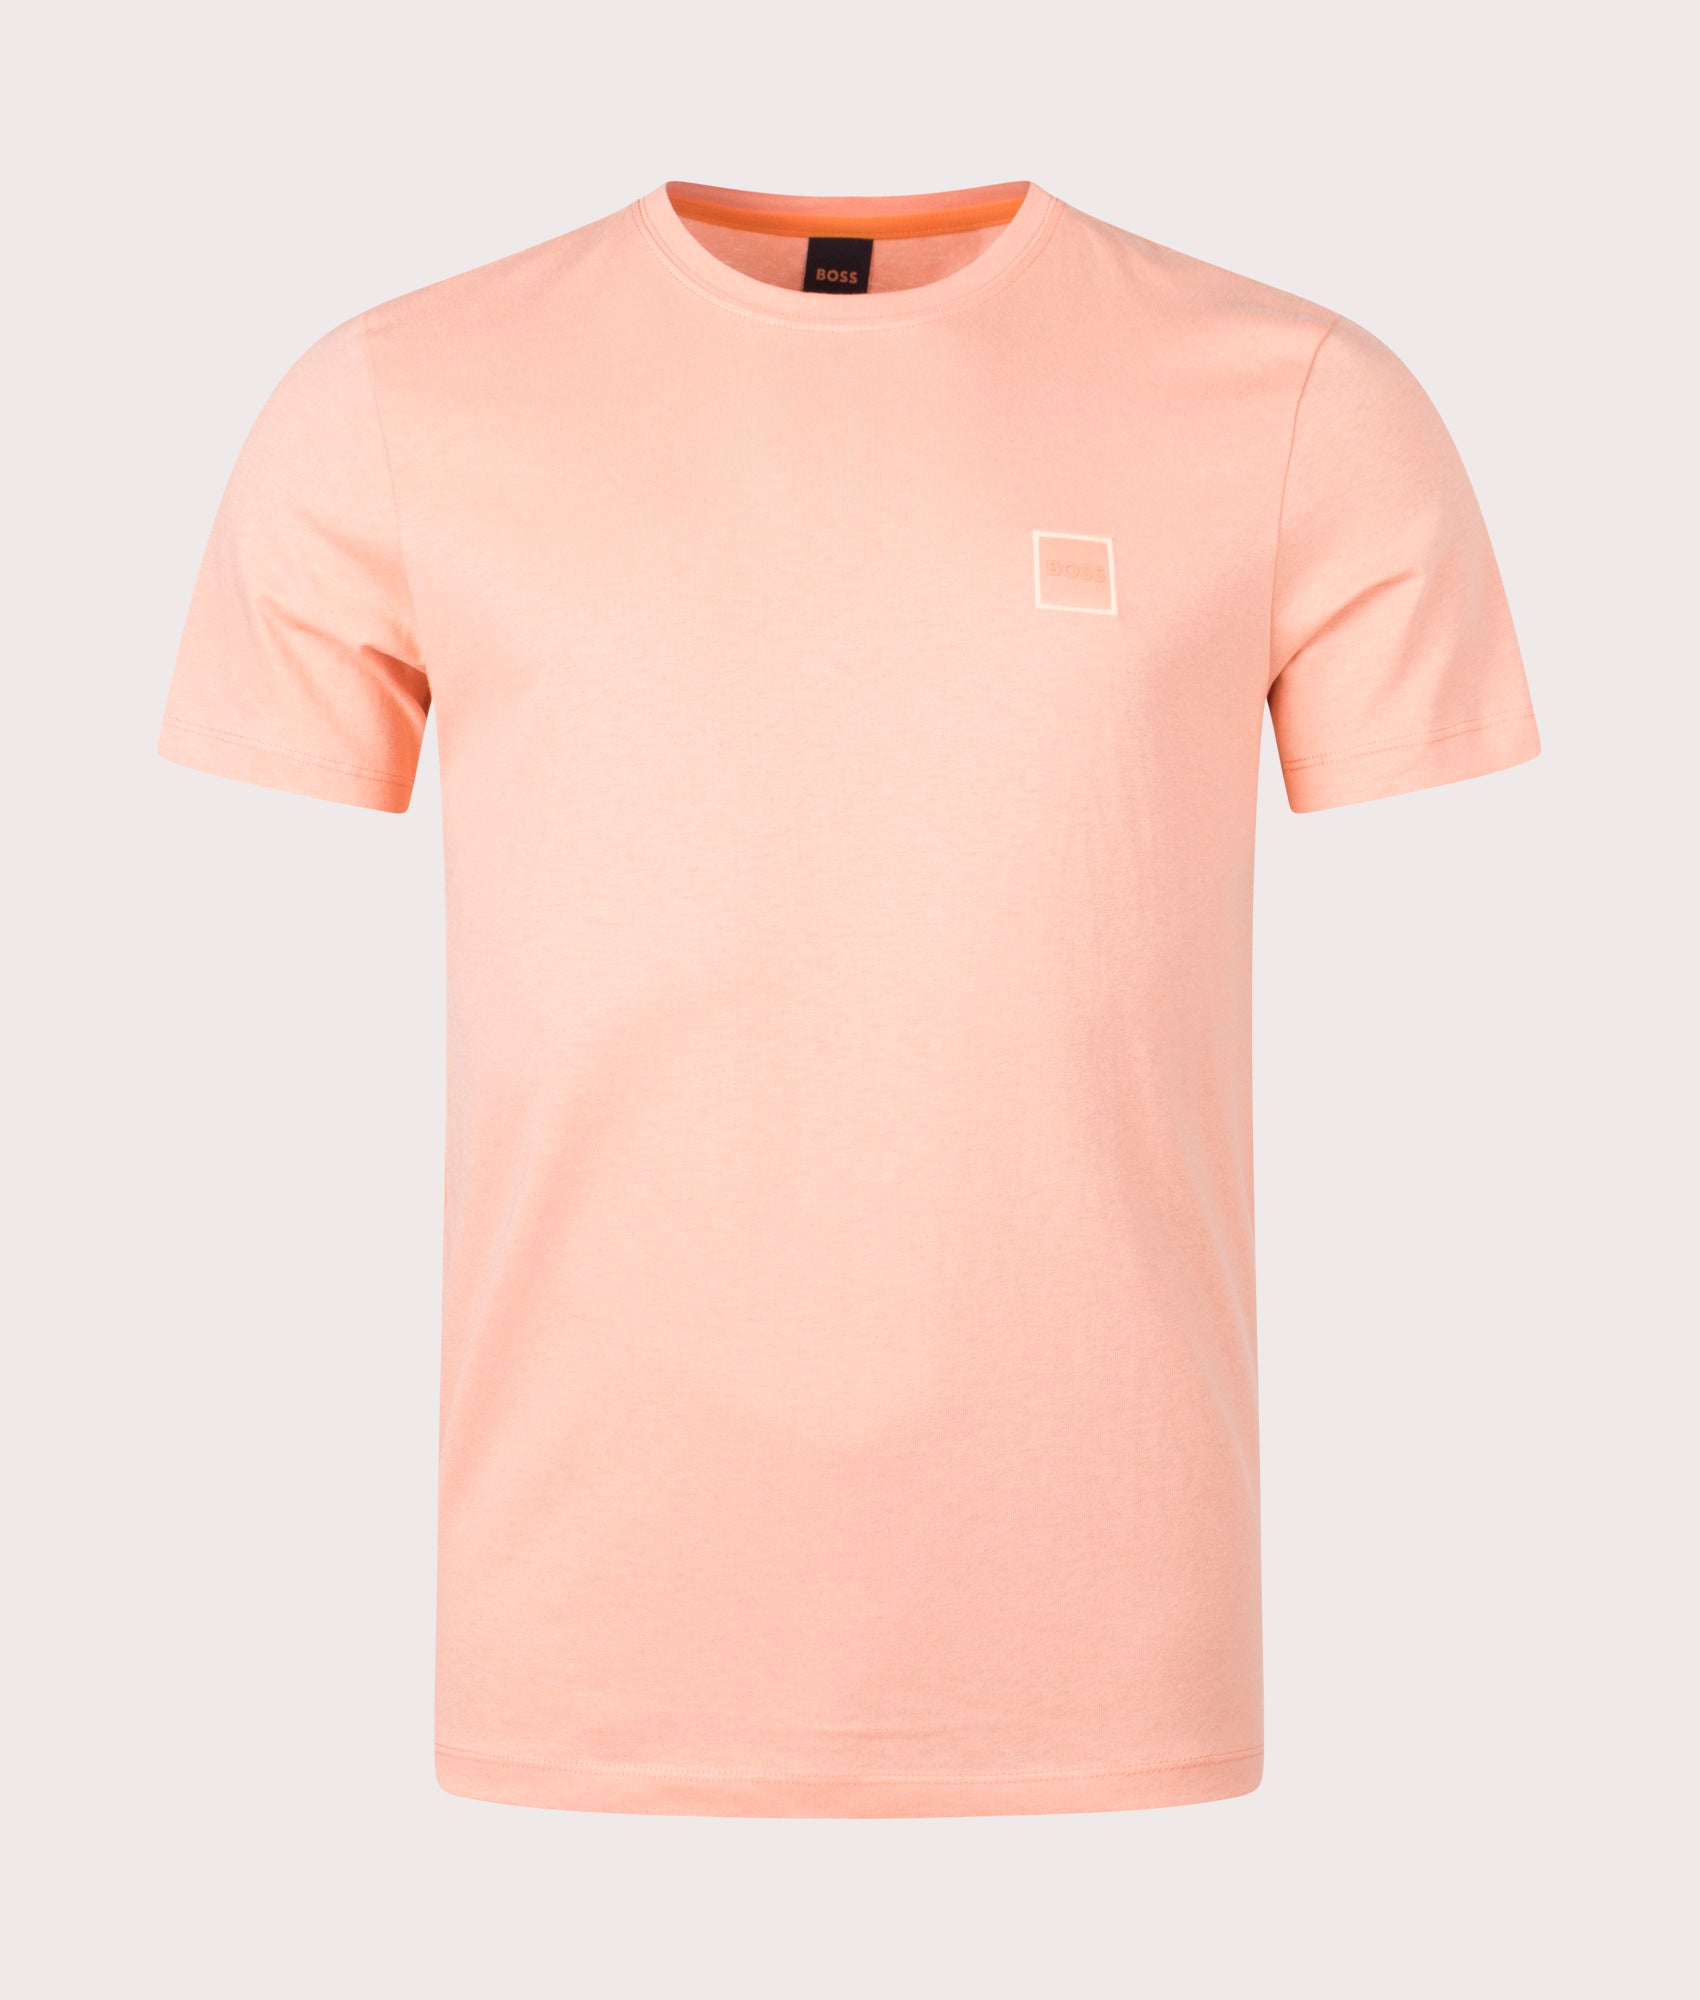 Relaxed Fit Tales T-Shirt Light/Pastel Orange | BOSS | EQVVS